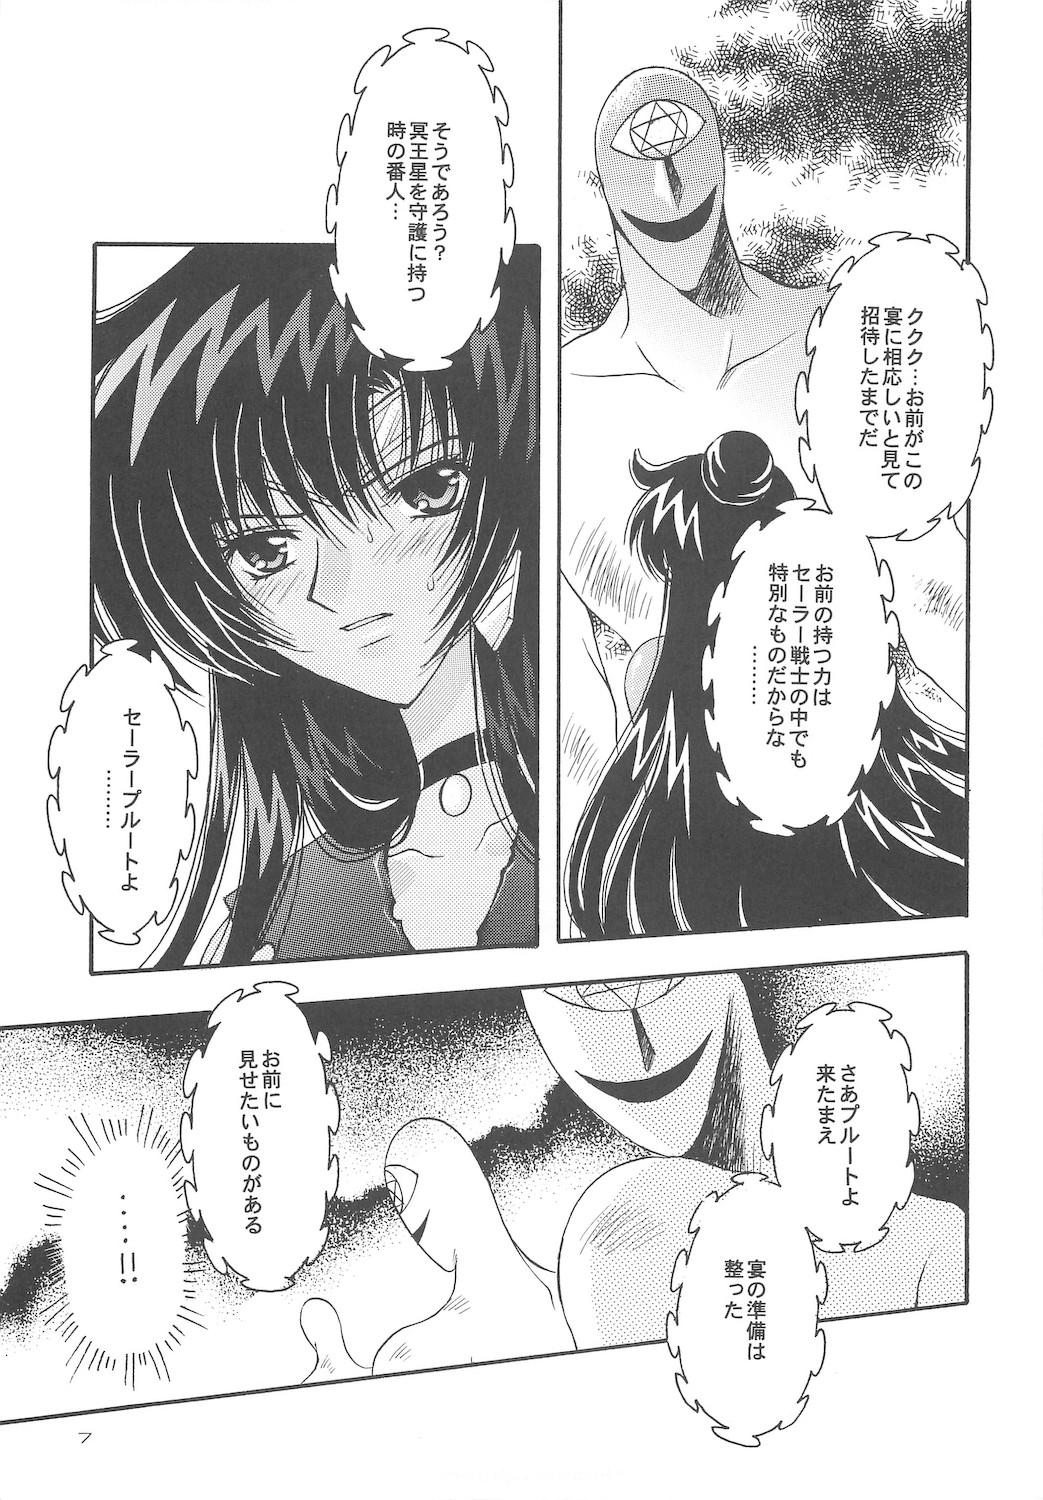 Hot Fucking Owaru Sekai dai 4 shou - Sailor moon Asians - Page 7